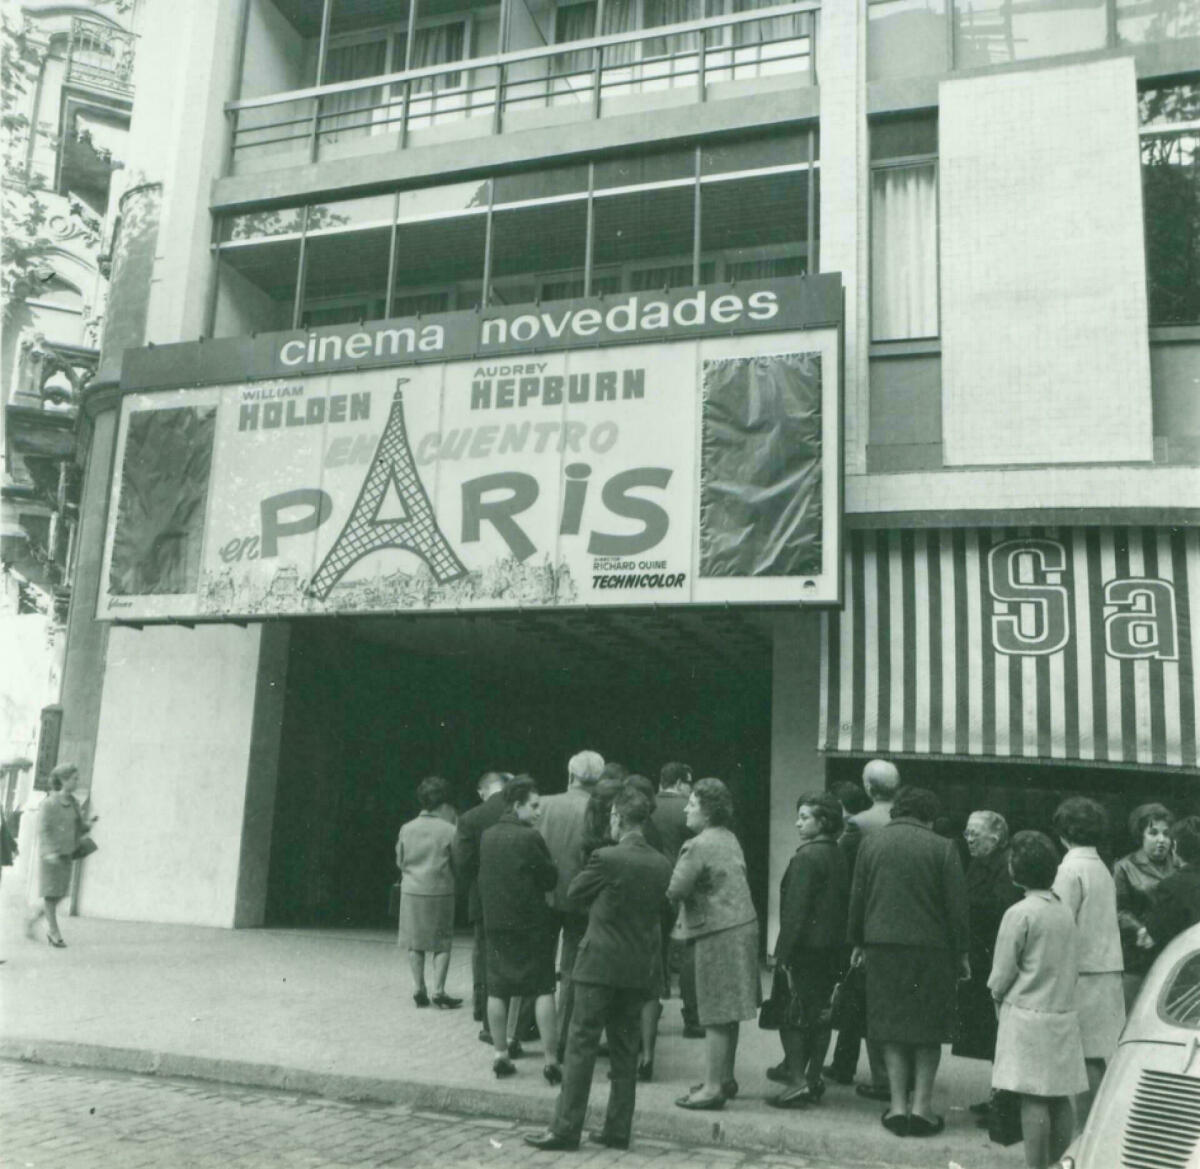 inema Novedades. Cine teatro Novedades (1959-2009) al carrer Casp, 1 de novembre 1964. AFB. Postius